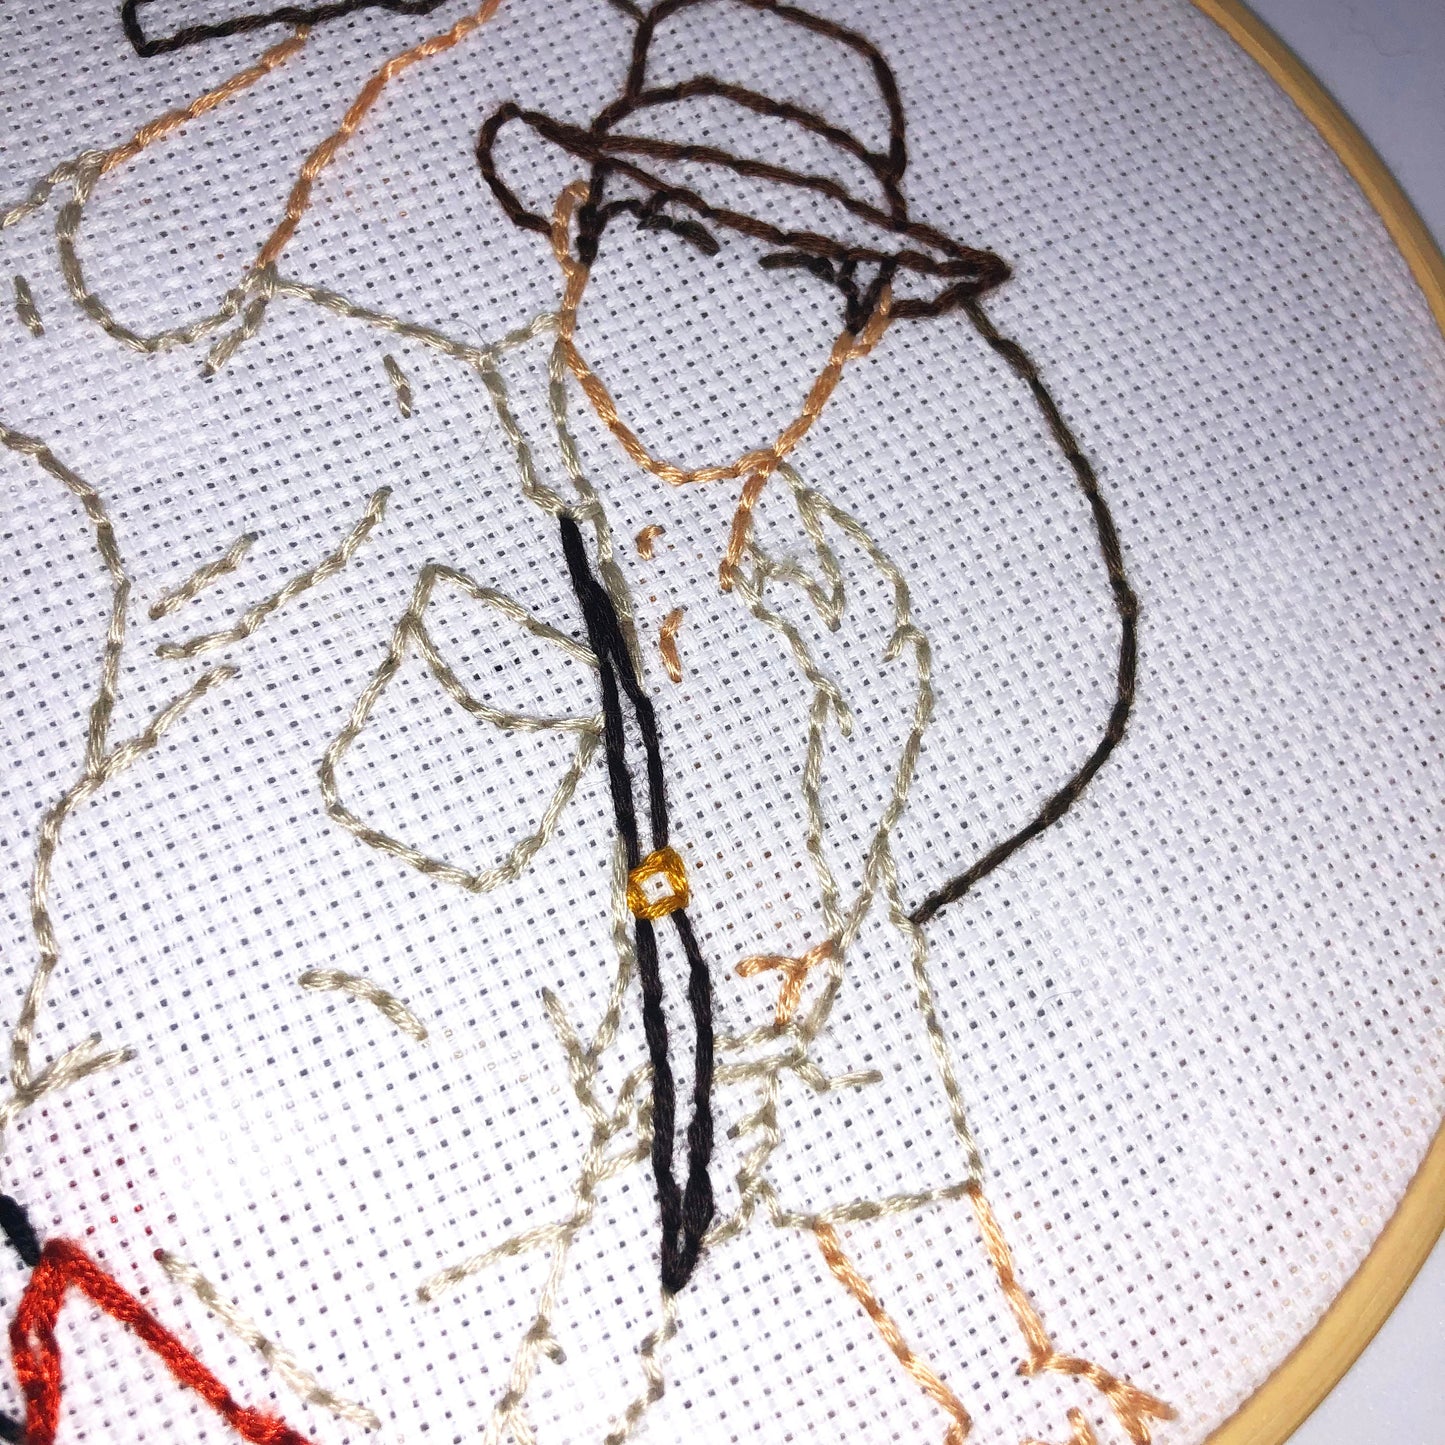 Indiana Jones embroidery